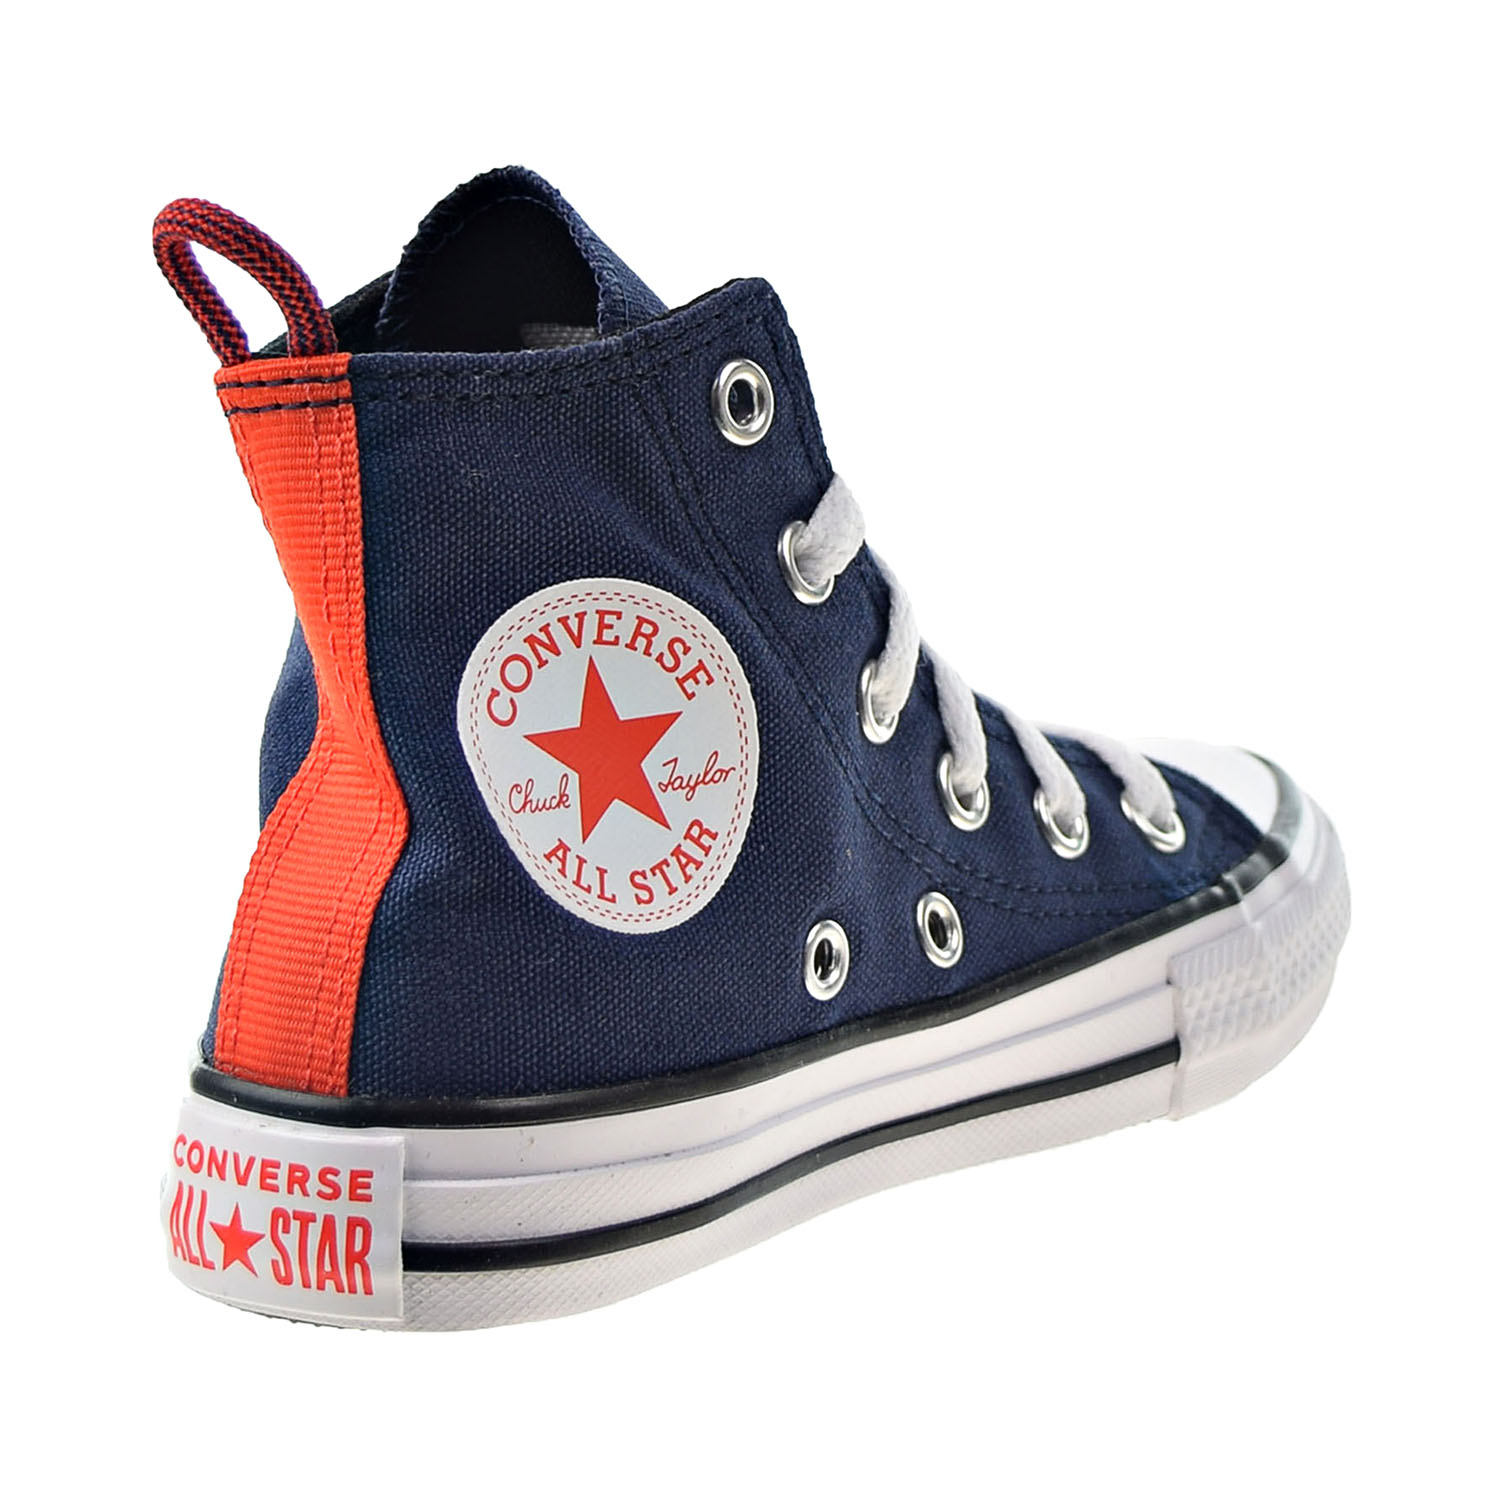 Converse Chuck Taylor All Star Hi Kids' Shoes Midnight Navy-Bright Orange 670671f - image 3 of 6